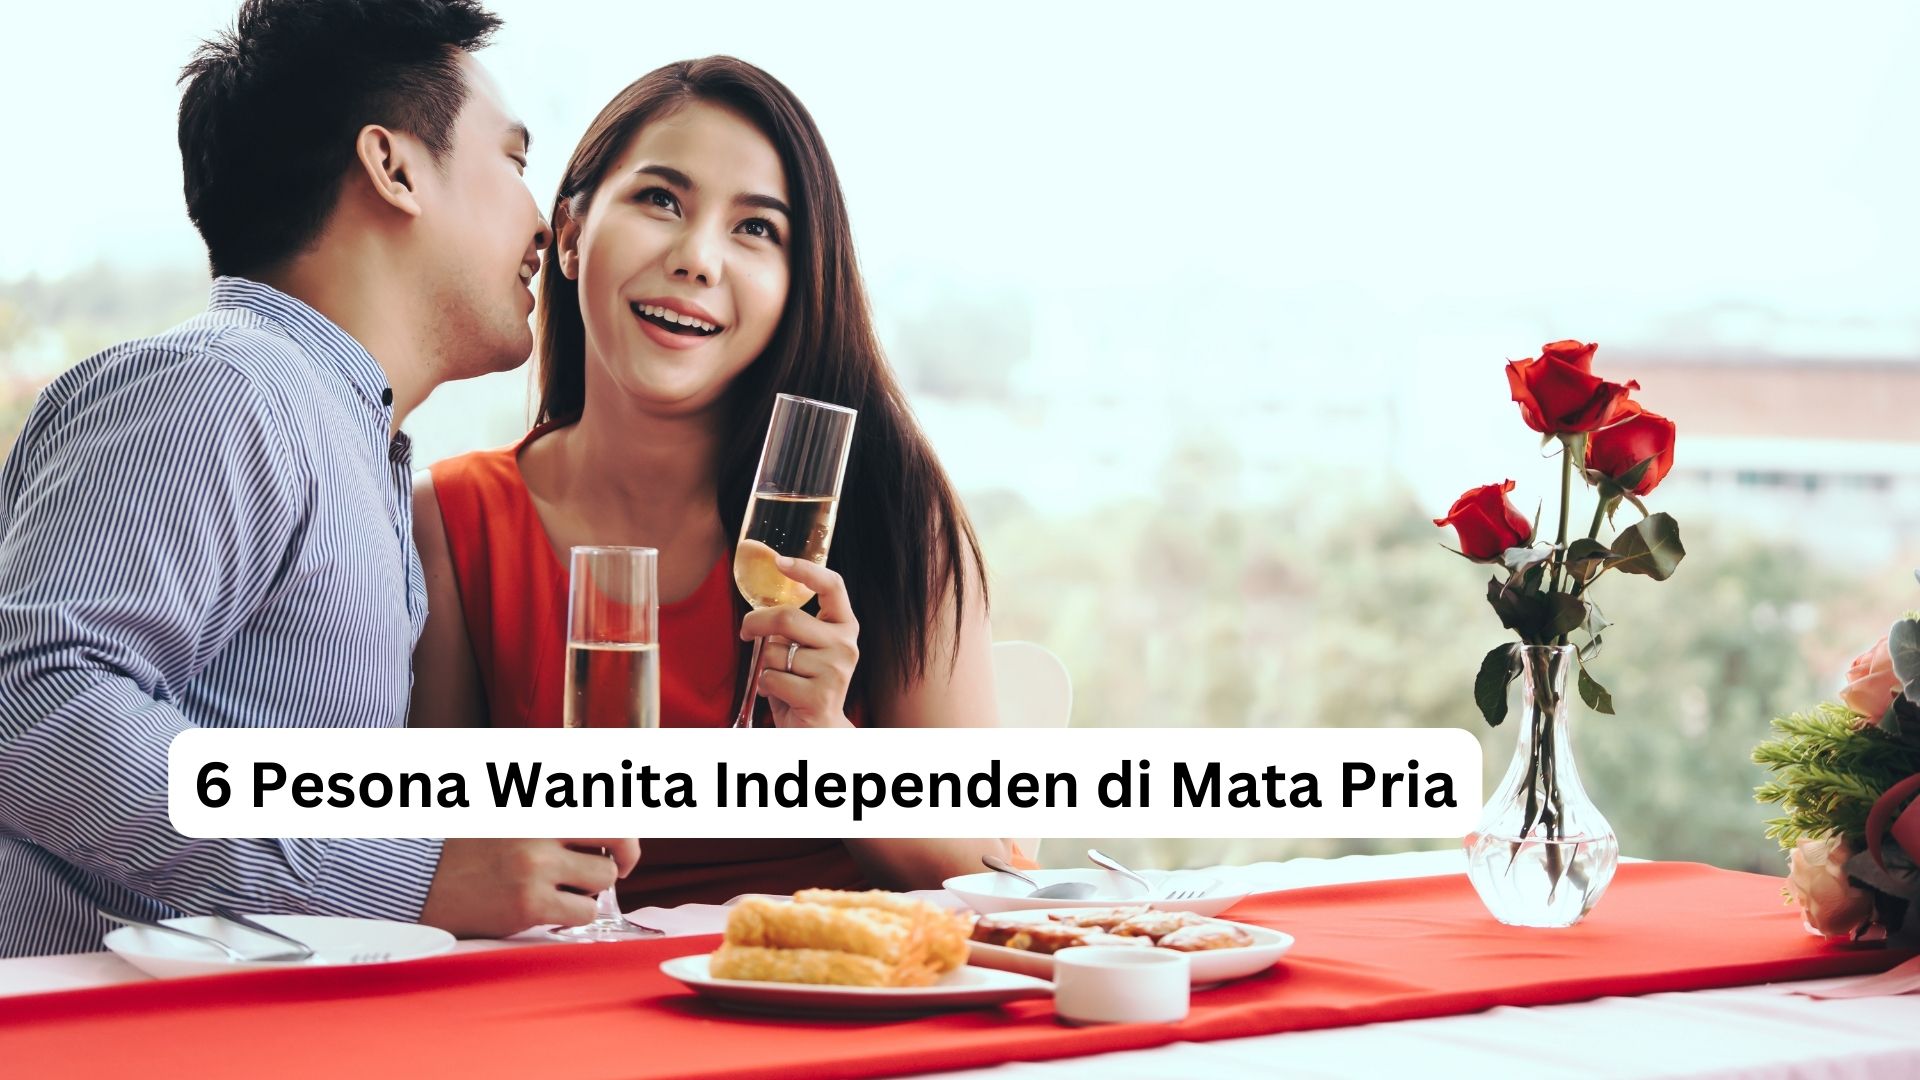 You are currently viewing 6 Pesona Wanita Independen di Mata Pria